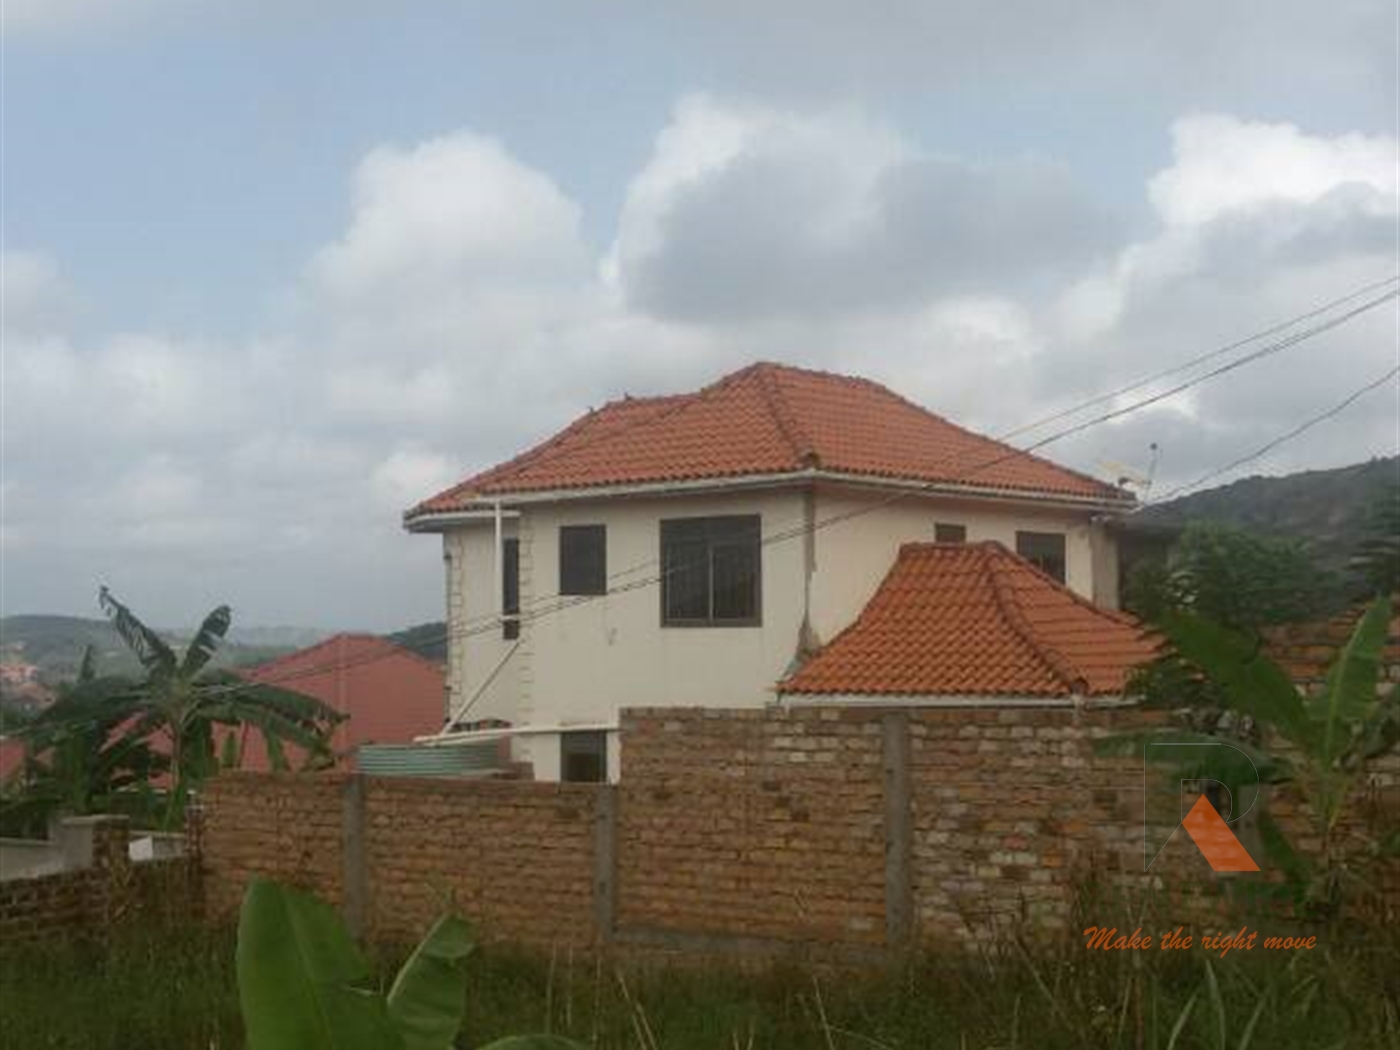 Town House for sale in Kitende Wakiso